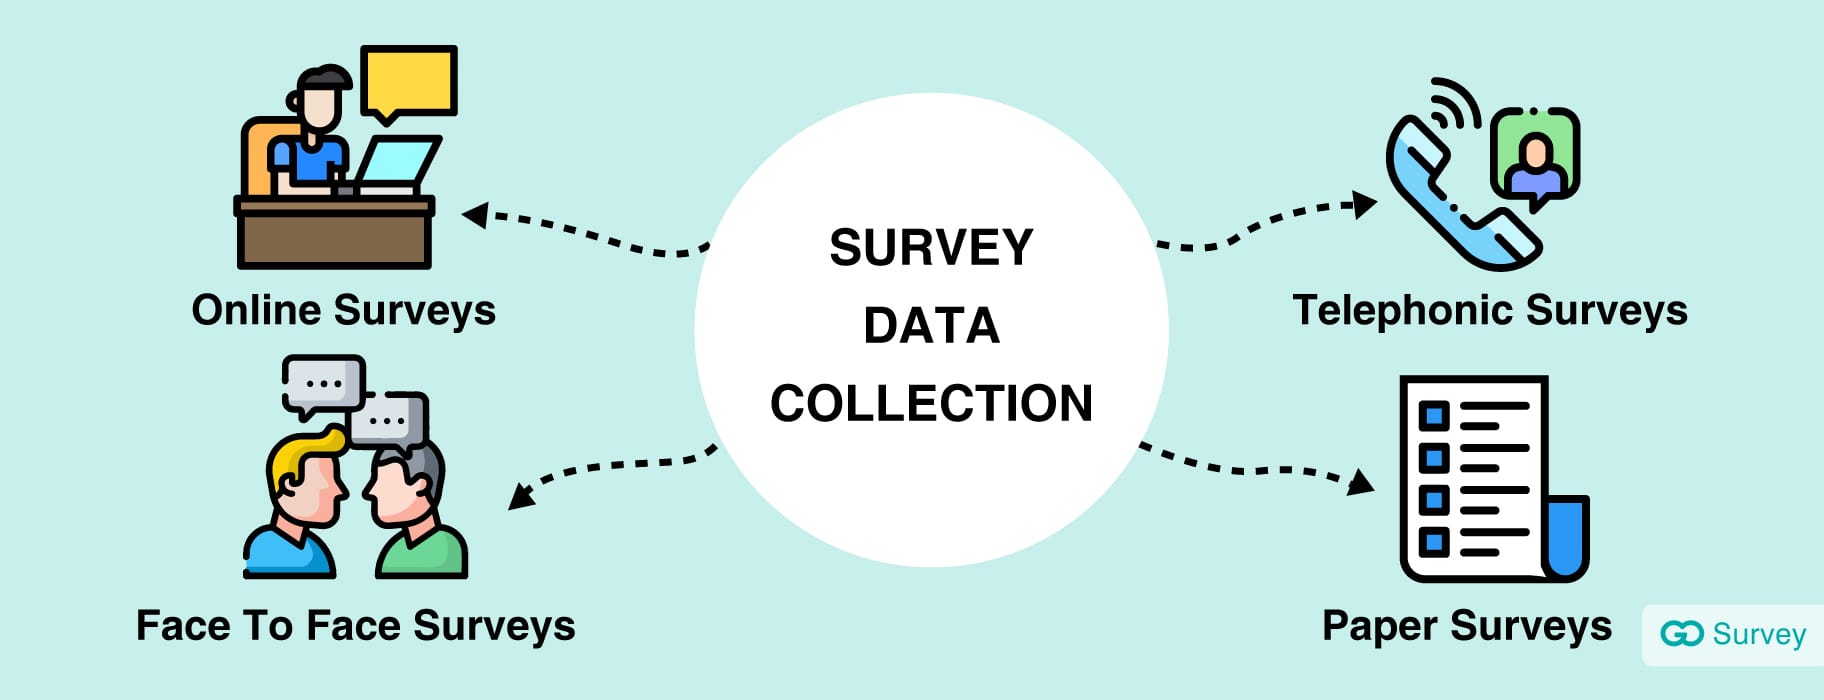 Survey Data Collection Methods